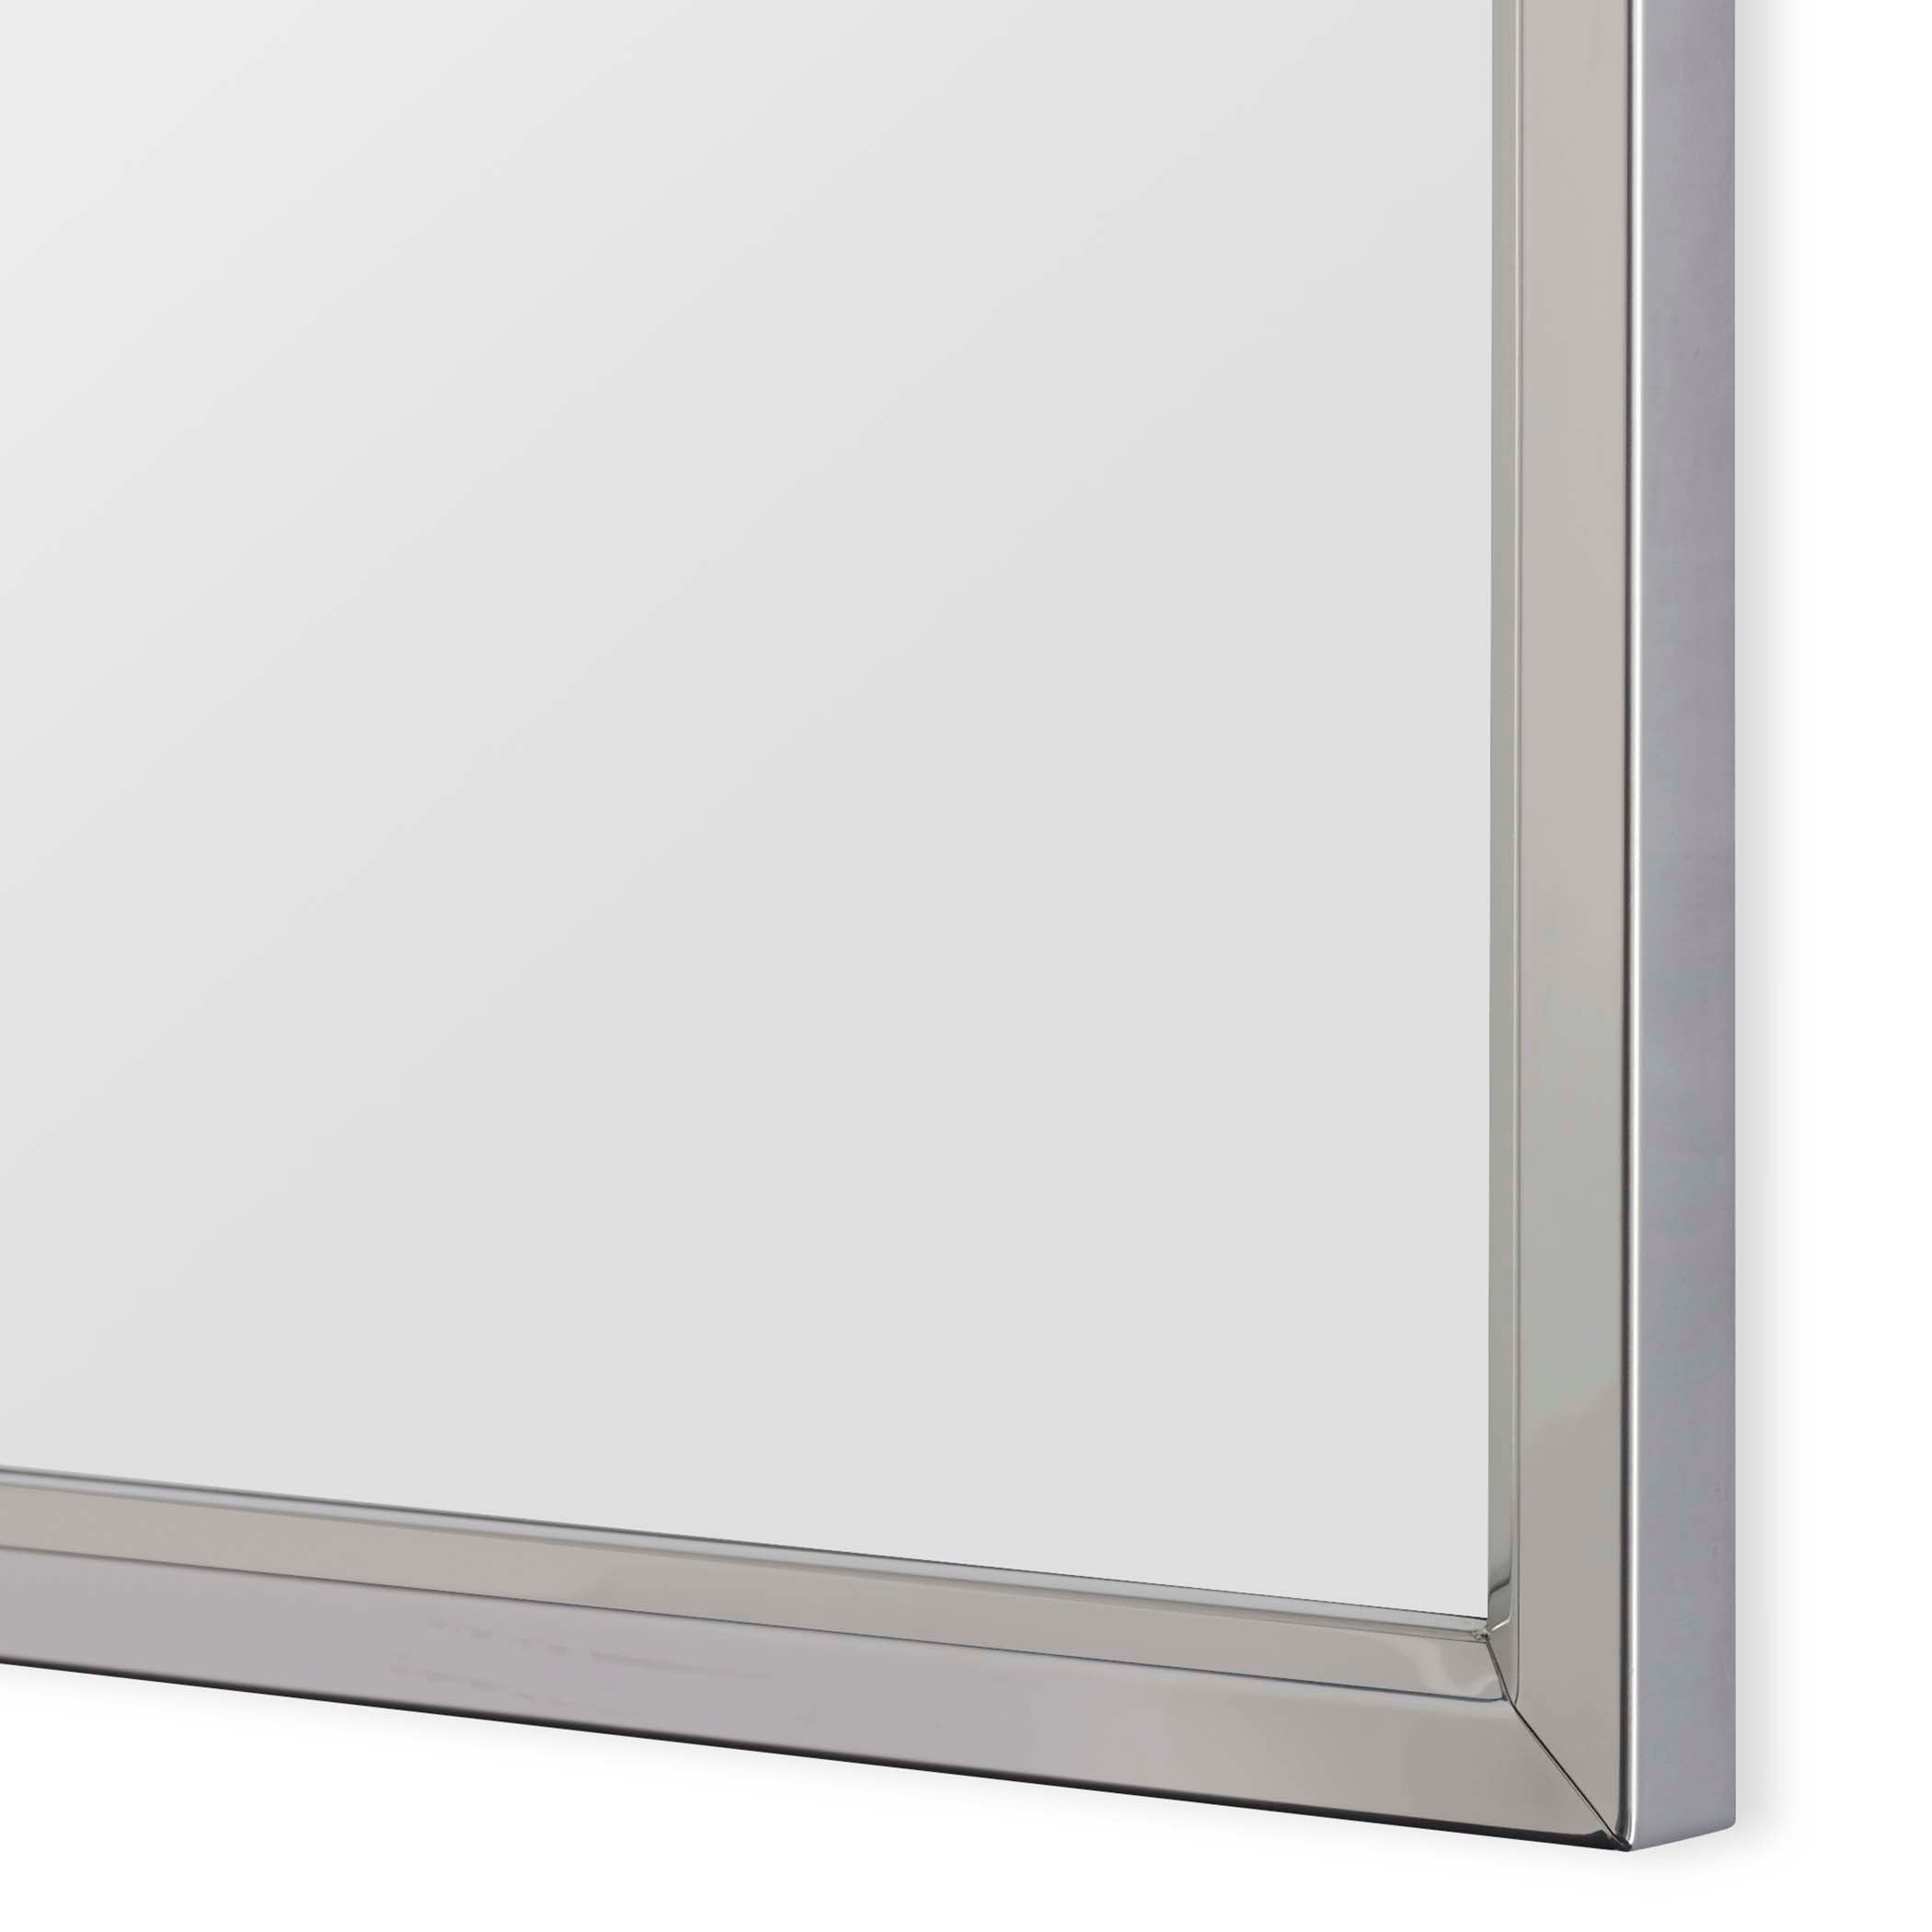 Decor Market Simple Design Mirror - Stainless Steel